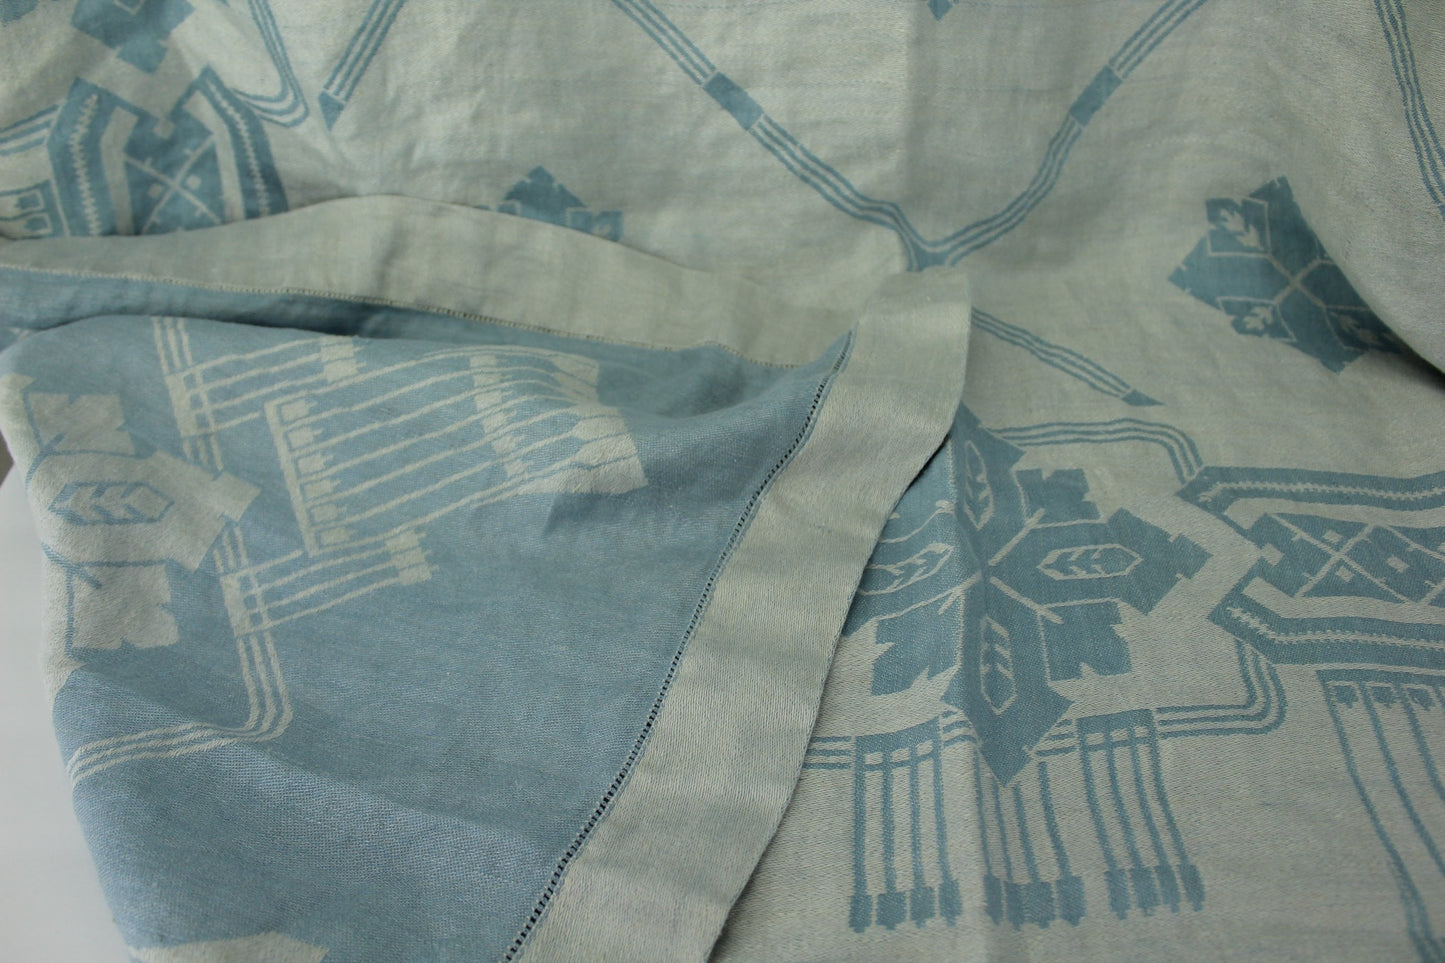 Blue Woven Tablecloth - 6 Matching Napkins - Fantastic Vintage Fabric elegant table set